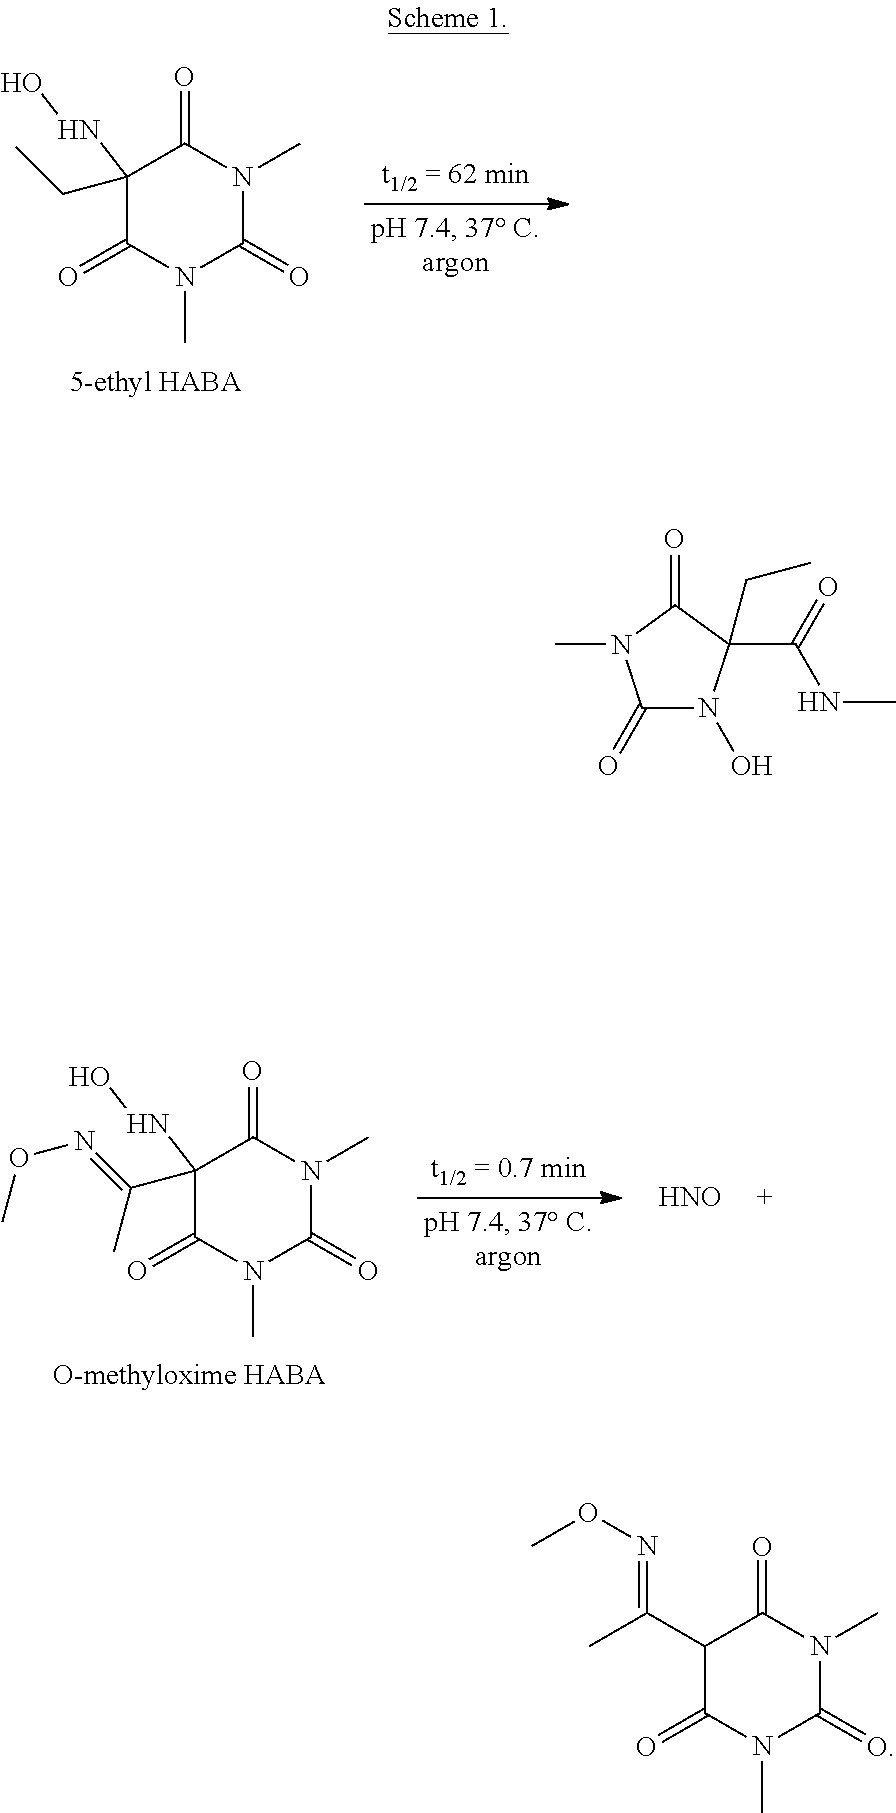 N-hydroxylamino-barbituric acid derivatives